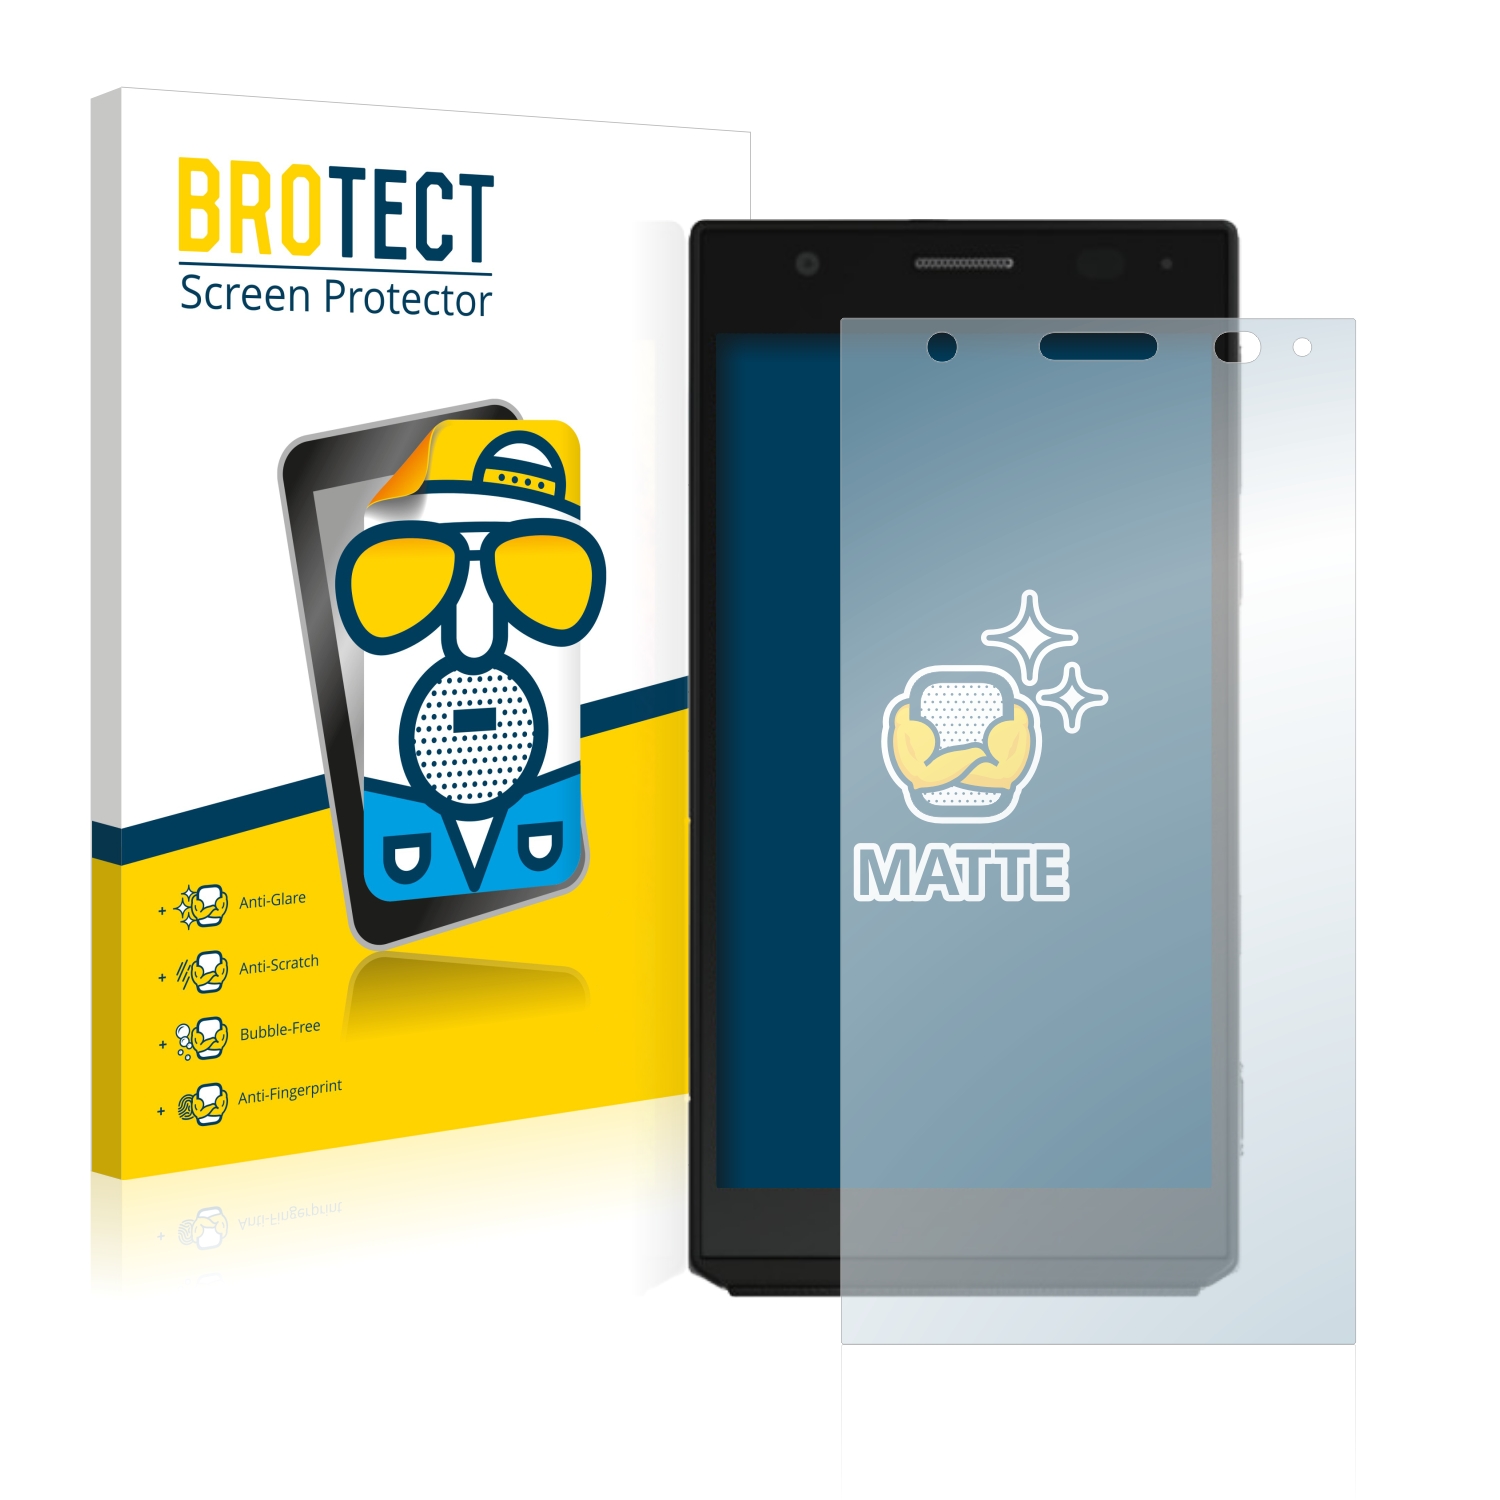 Anti-Fingerprint Protection Film brotect 2-Pack Screen Protector Anti-Glare compatible with Panasonic Lumix DMC-FZ330 Screen Protector Matte